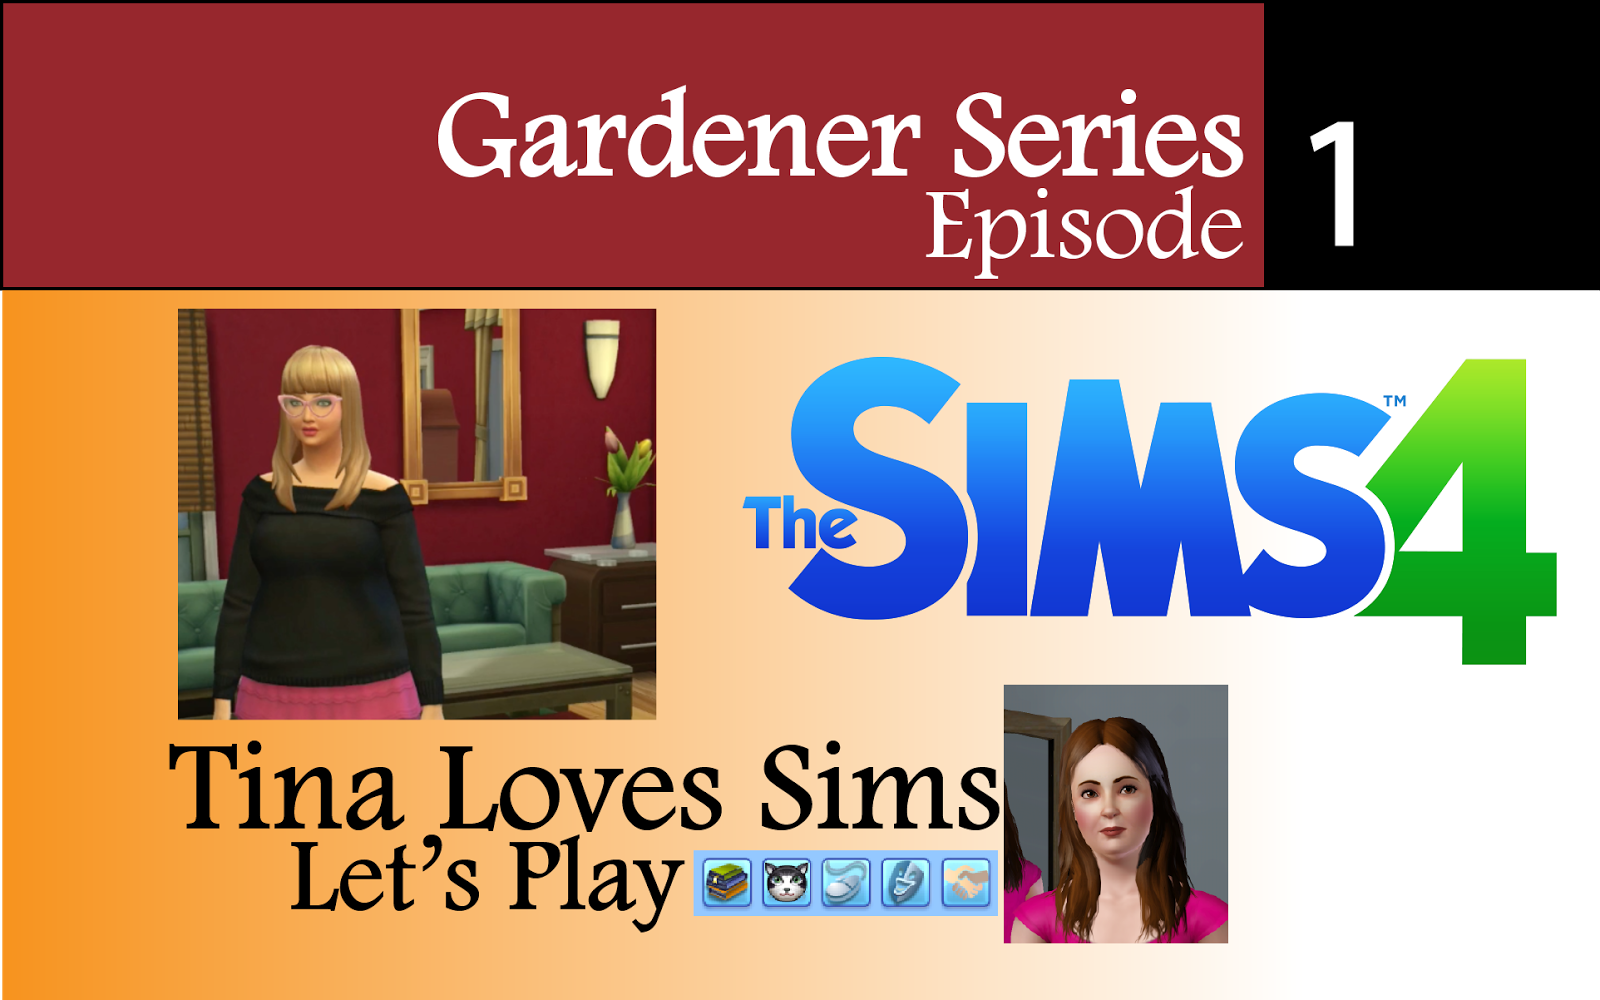 Sims 4 Gardener Series